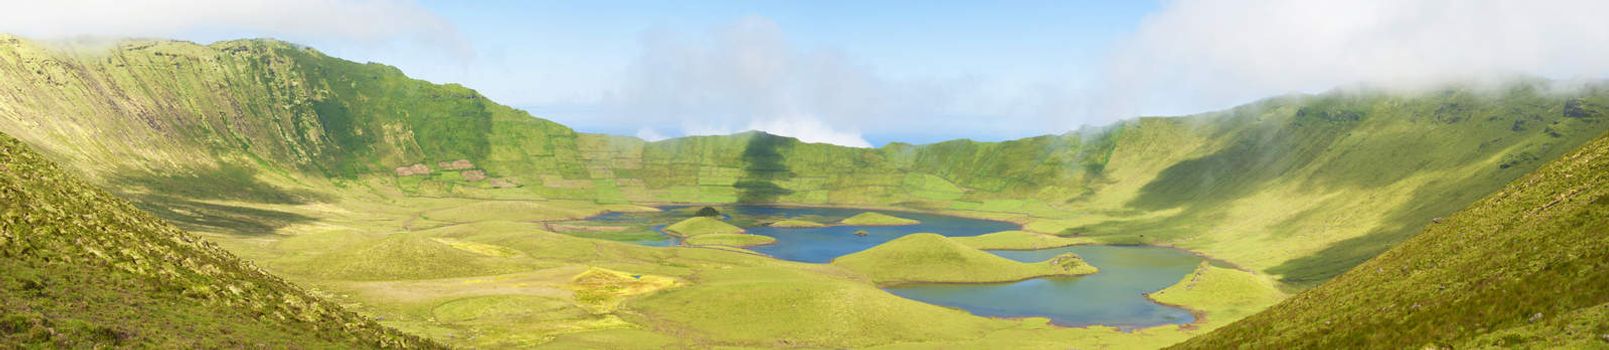 Extinct Volcano in Azores - Landscape Panoramic Photo